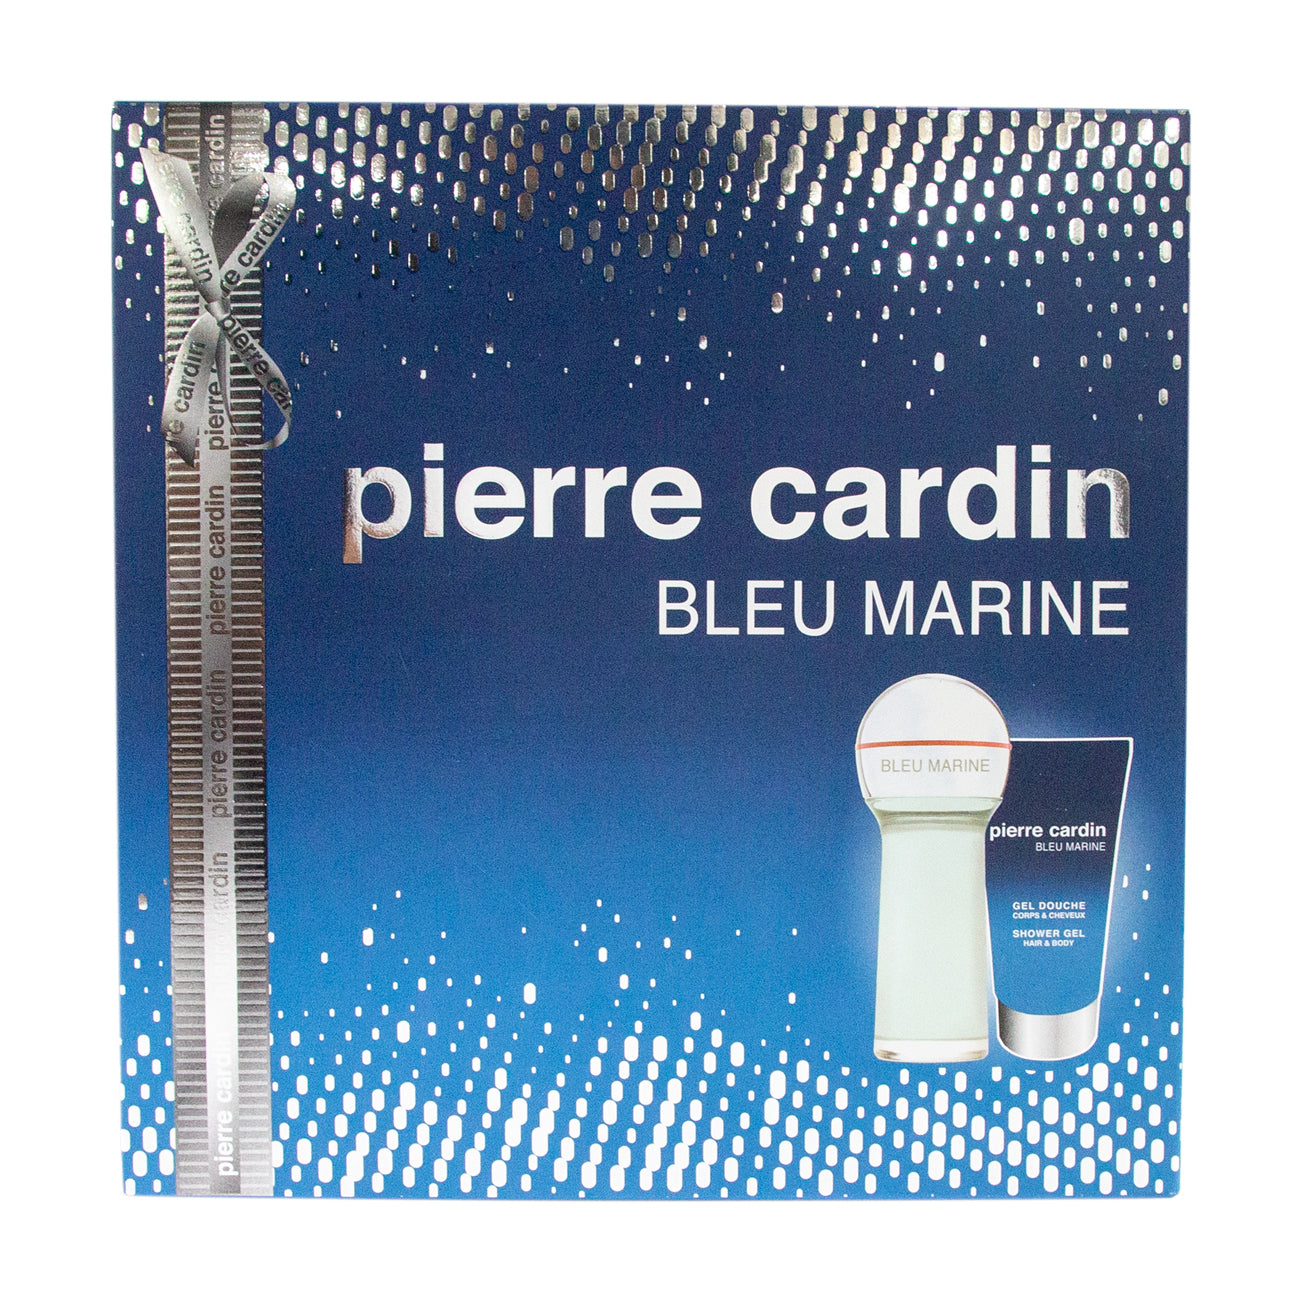 Pierre Cardin Bleu Marine Gift Set For Men